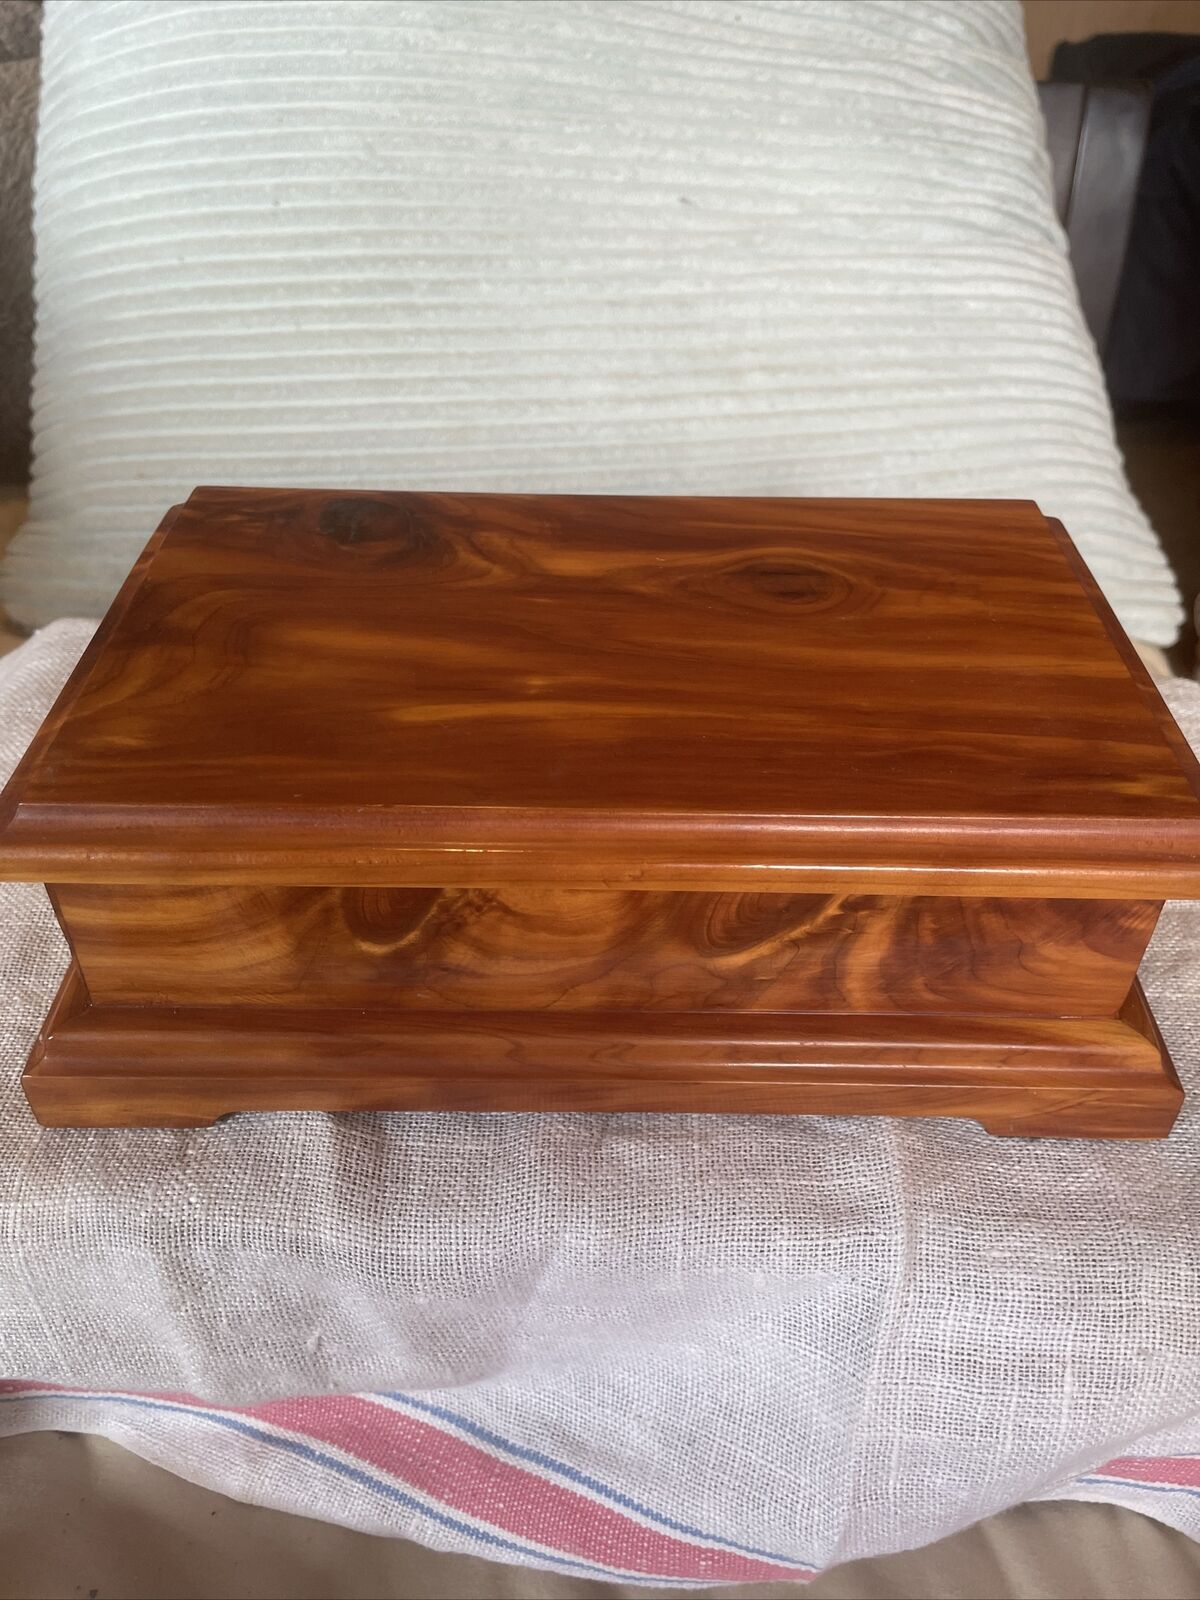 Handmade 2002 Wooden Box. It’s A Beauty 10x3”